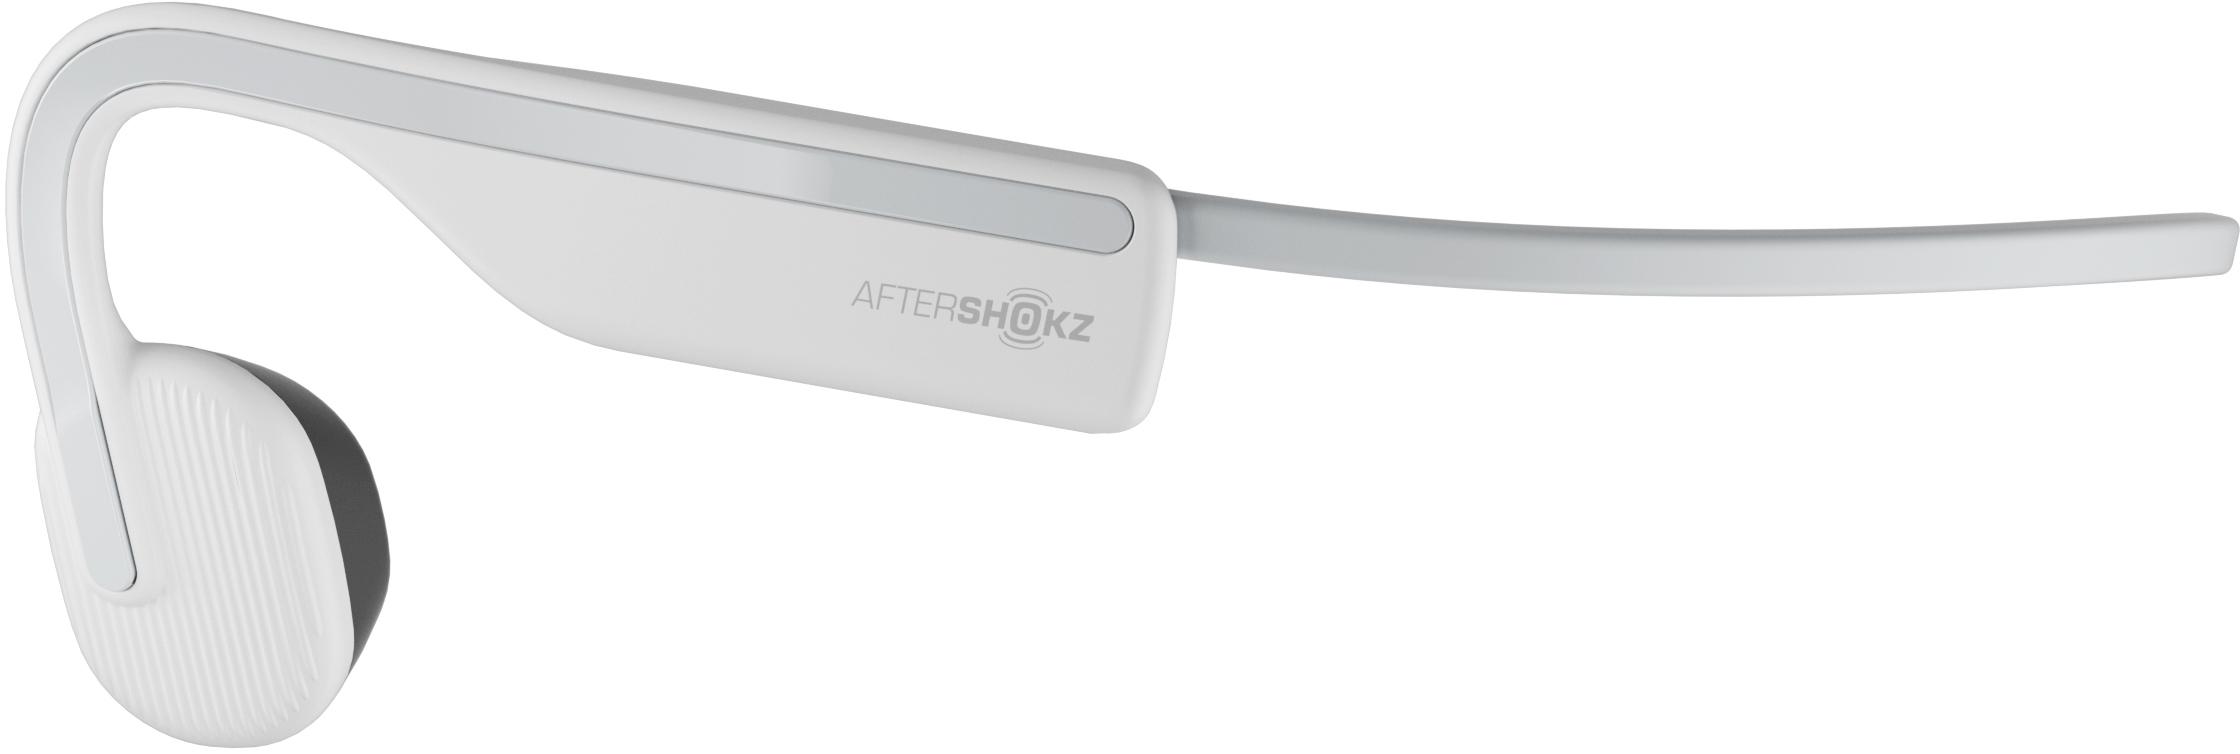 Aftershokz Openmove Bluetooth Headphones - Apline White